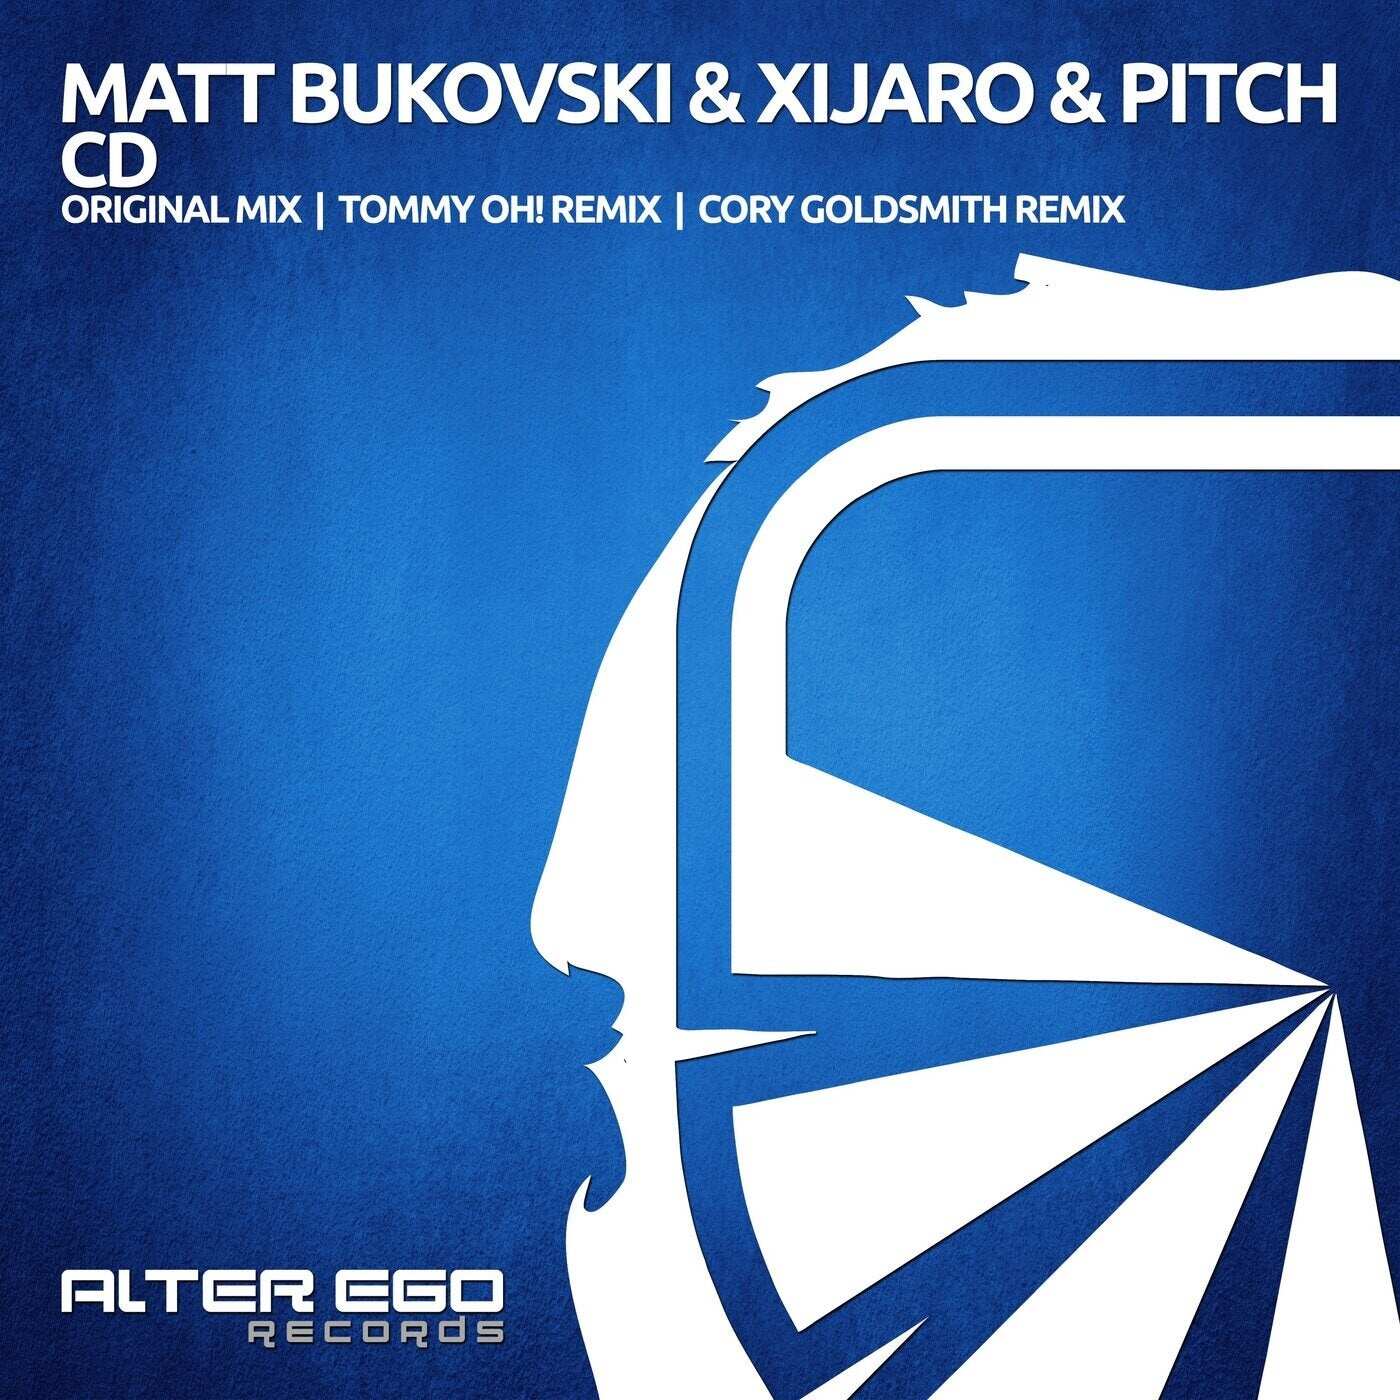 Matt Bukovski & XiJaro & Pitch - CD (Original Mix)